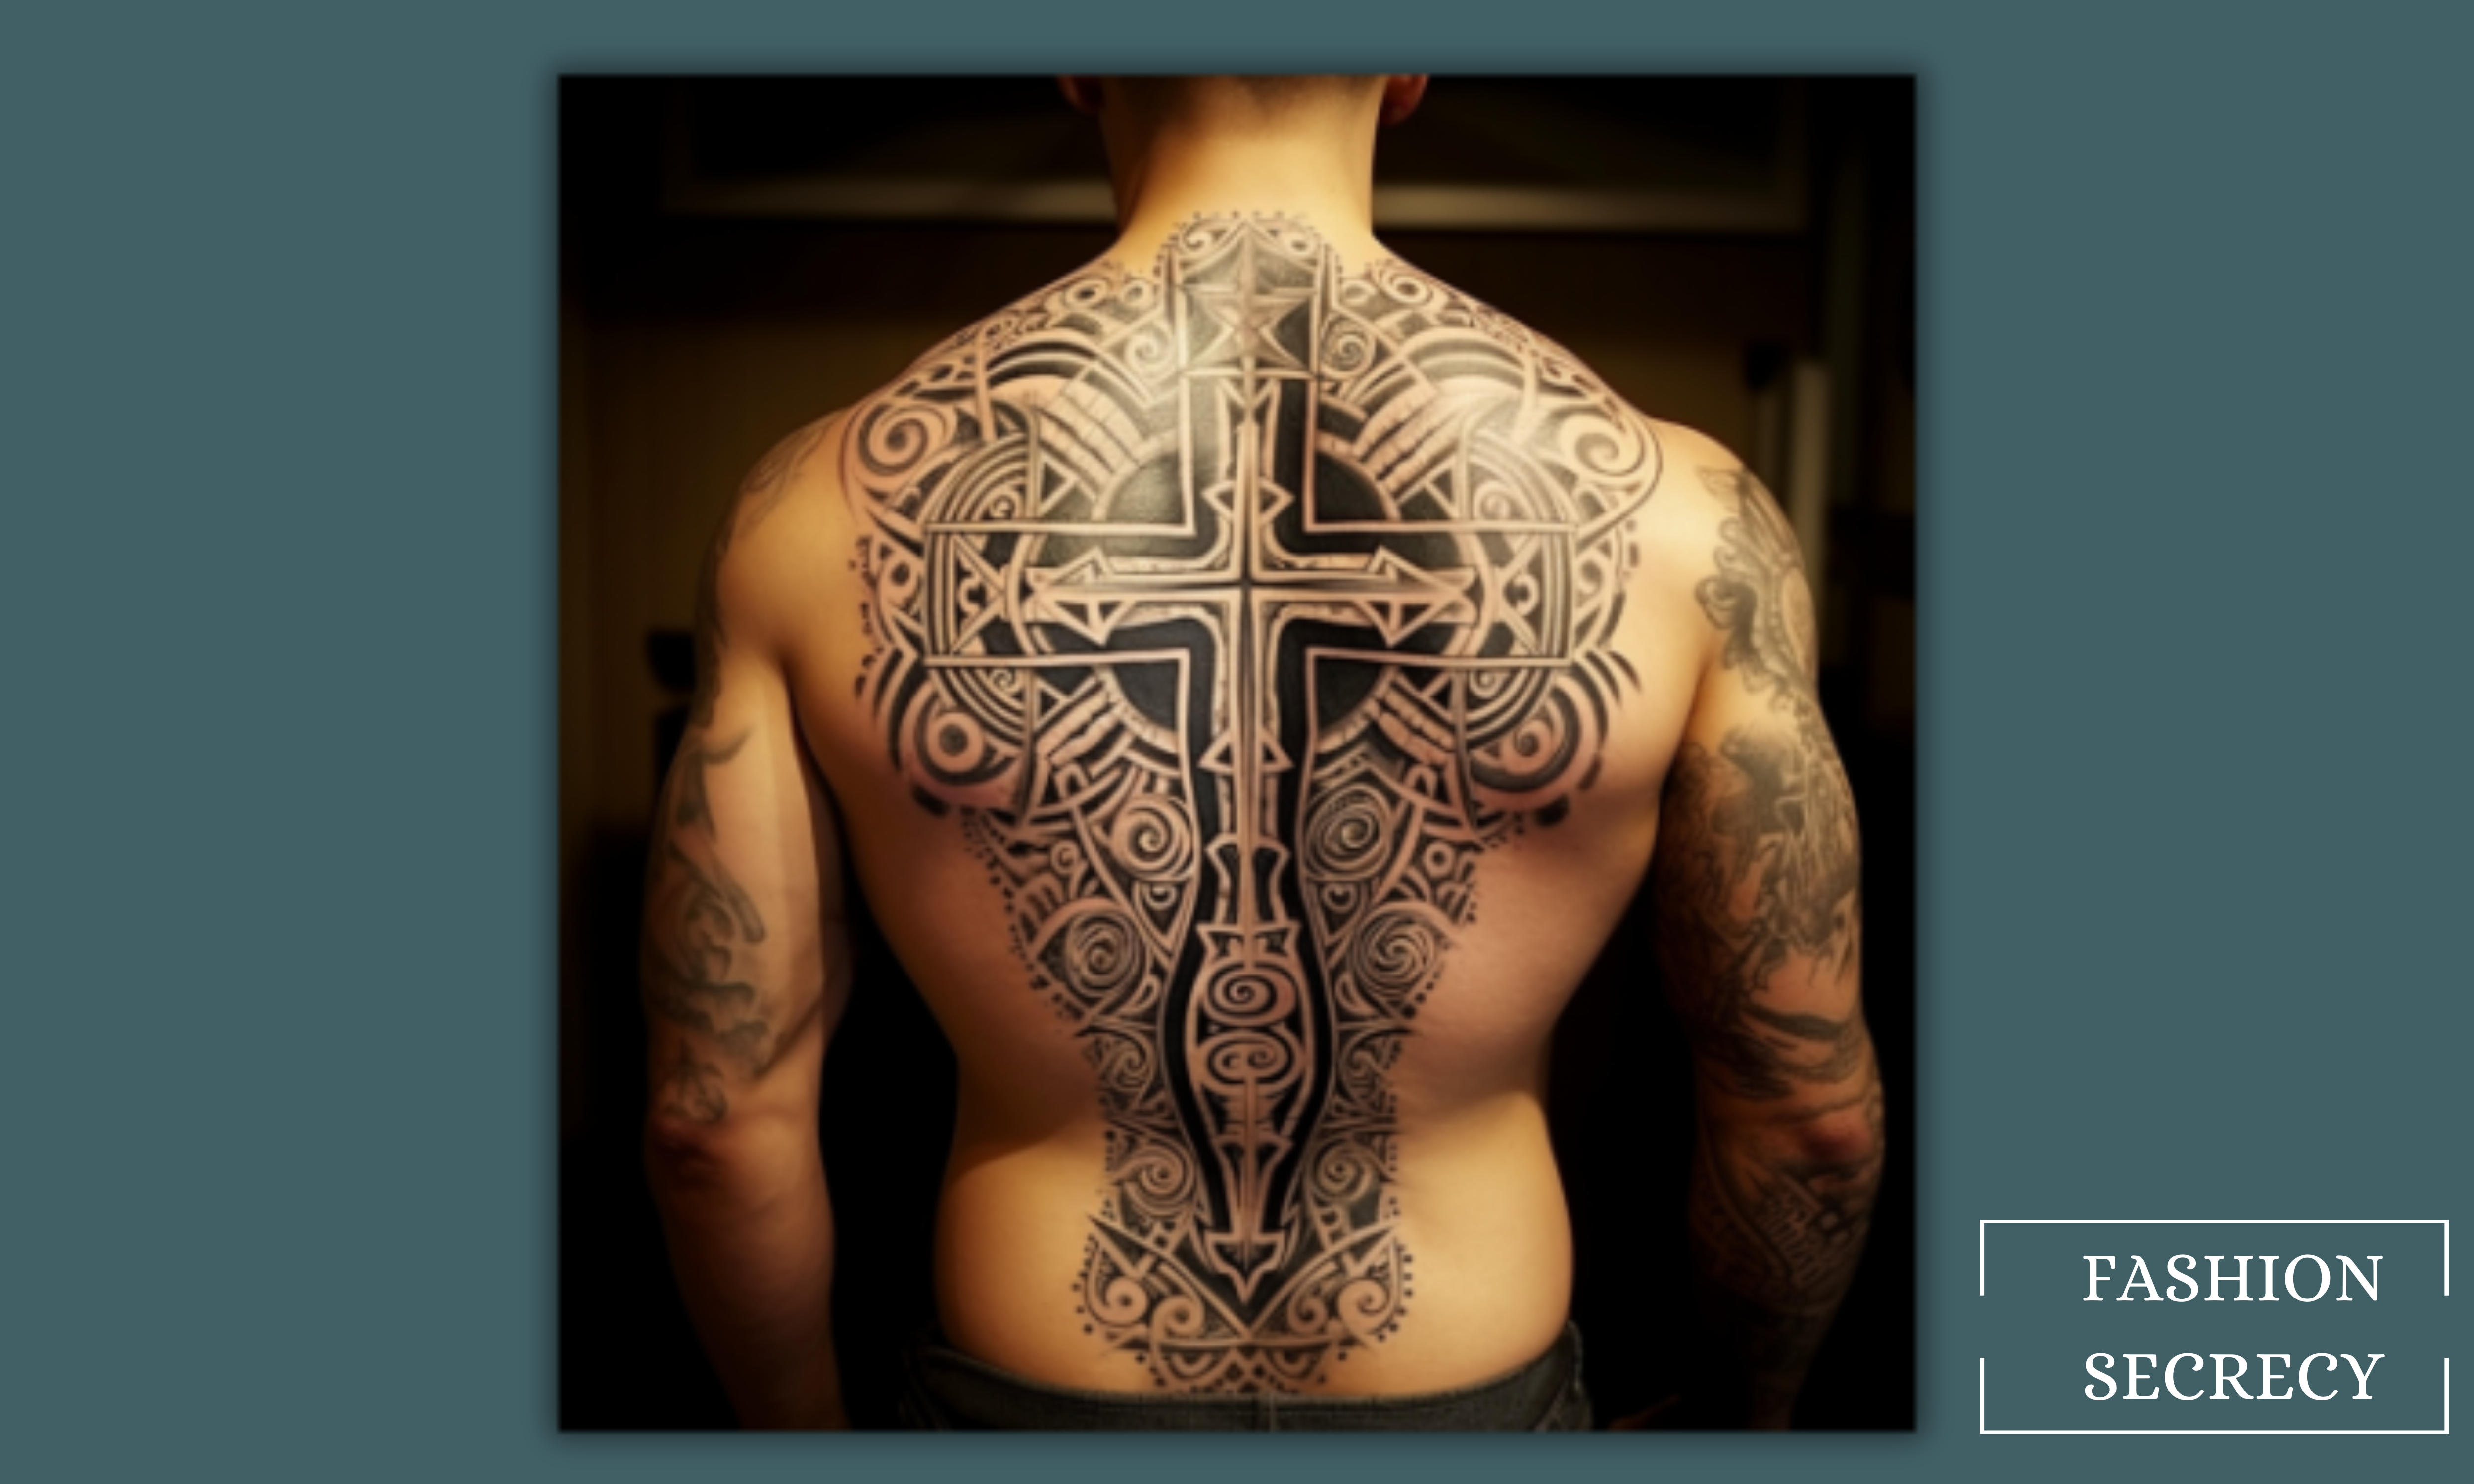 Beautiful Ornate Cross Sketch Tattoo Stylized Stock Vector (Royalty Free)  709860319 | Shutterstock